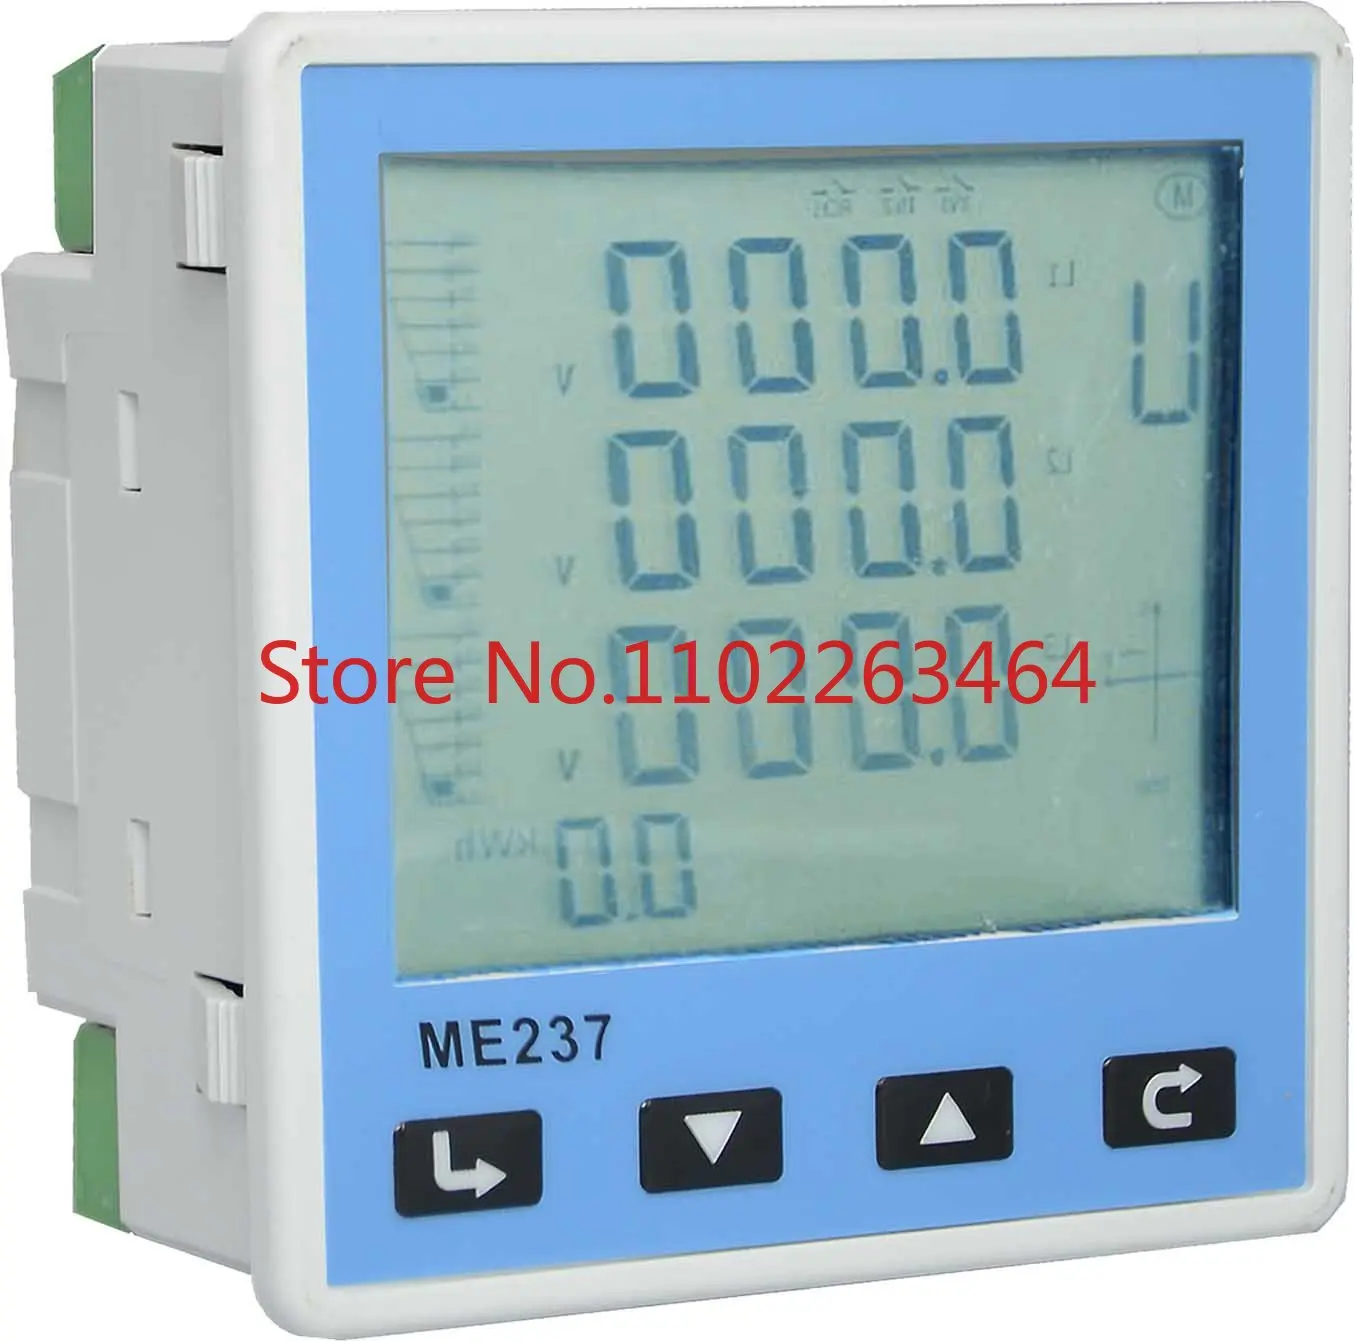 

ME237 power inverter Electric Power Meter